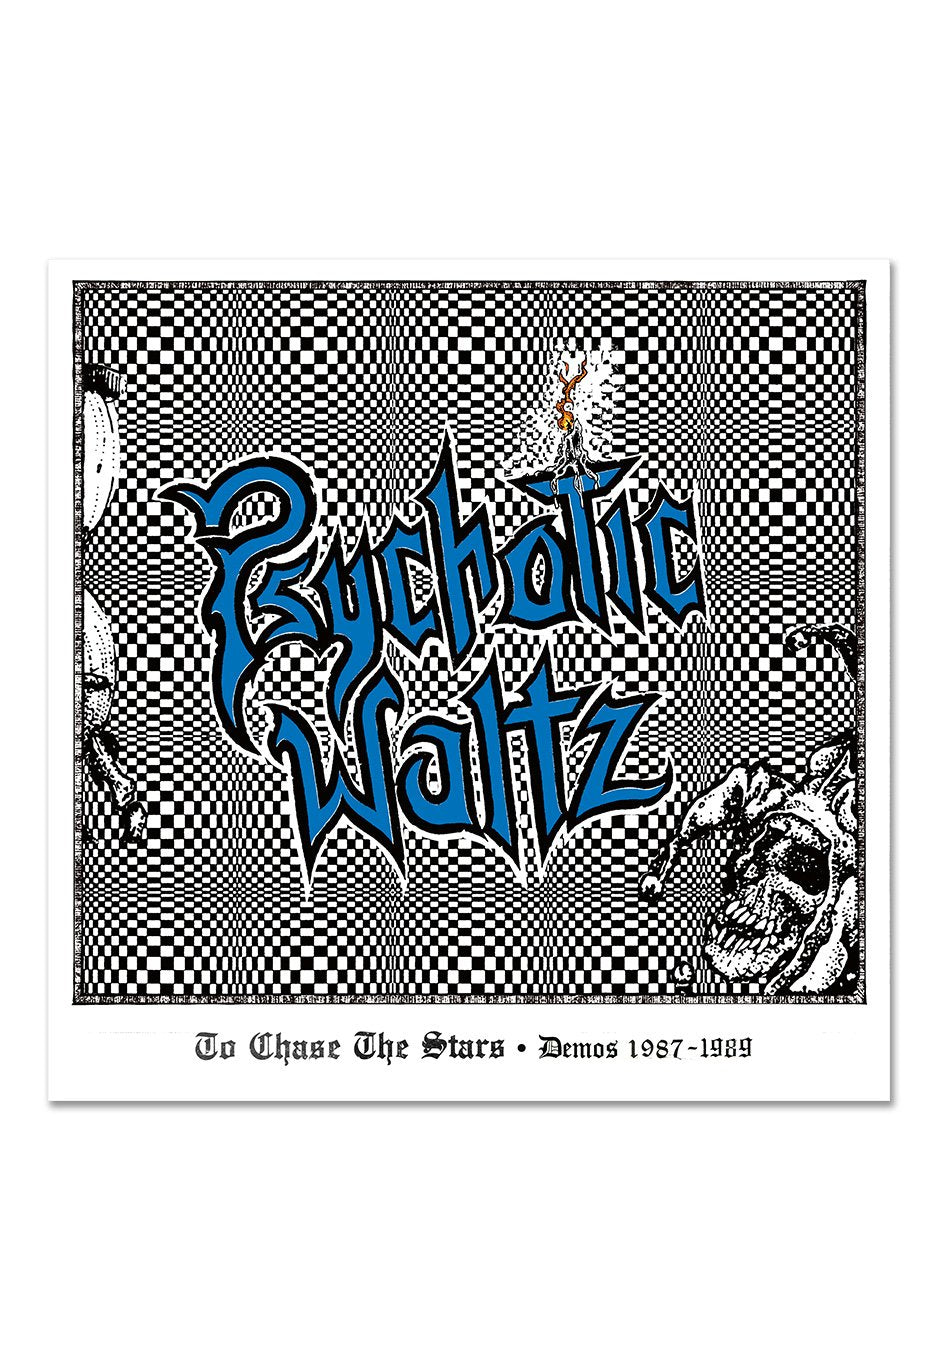 Psychotic Waltz - To Chase The Stars (Demos 1987 - 1989) Ltd. White - Colored 2 Vinyl